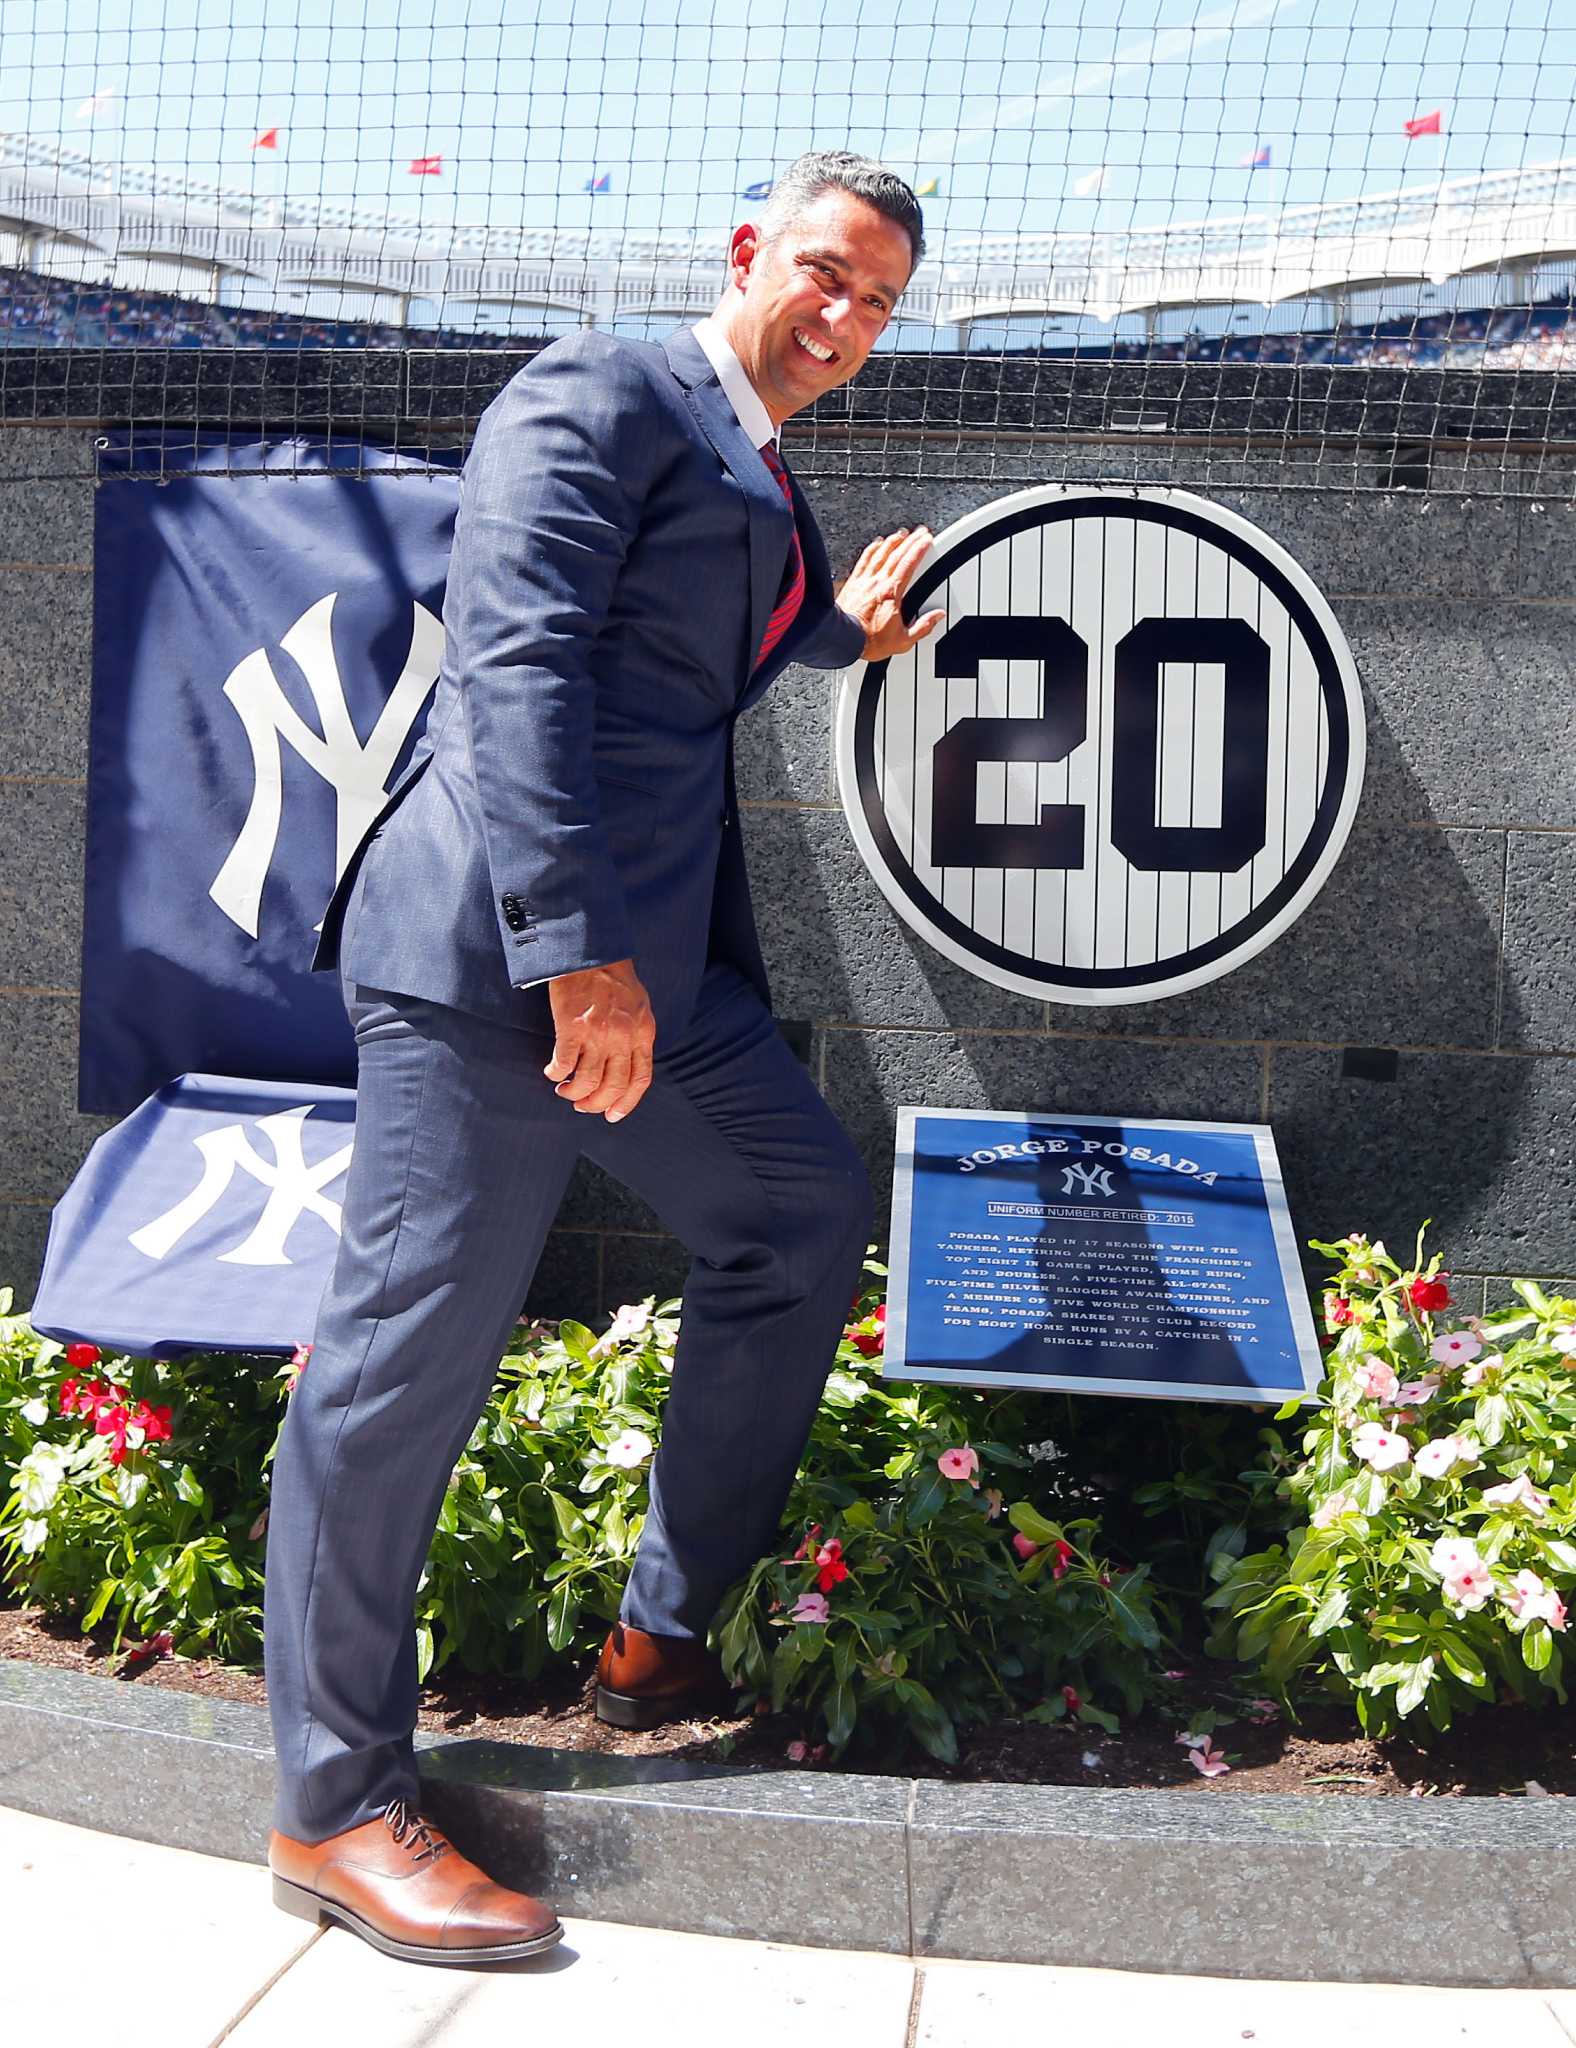 Yankees retire Posada's No. 20